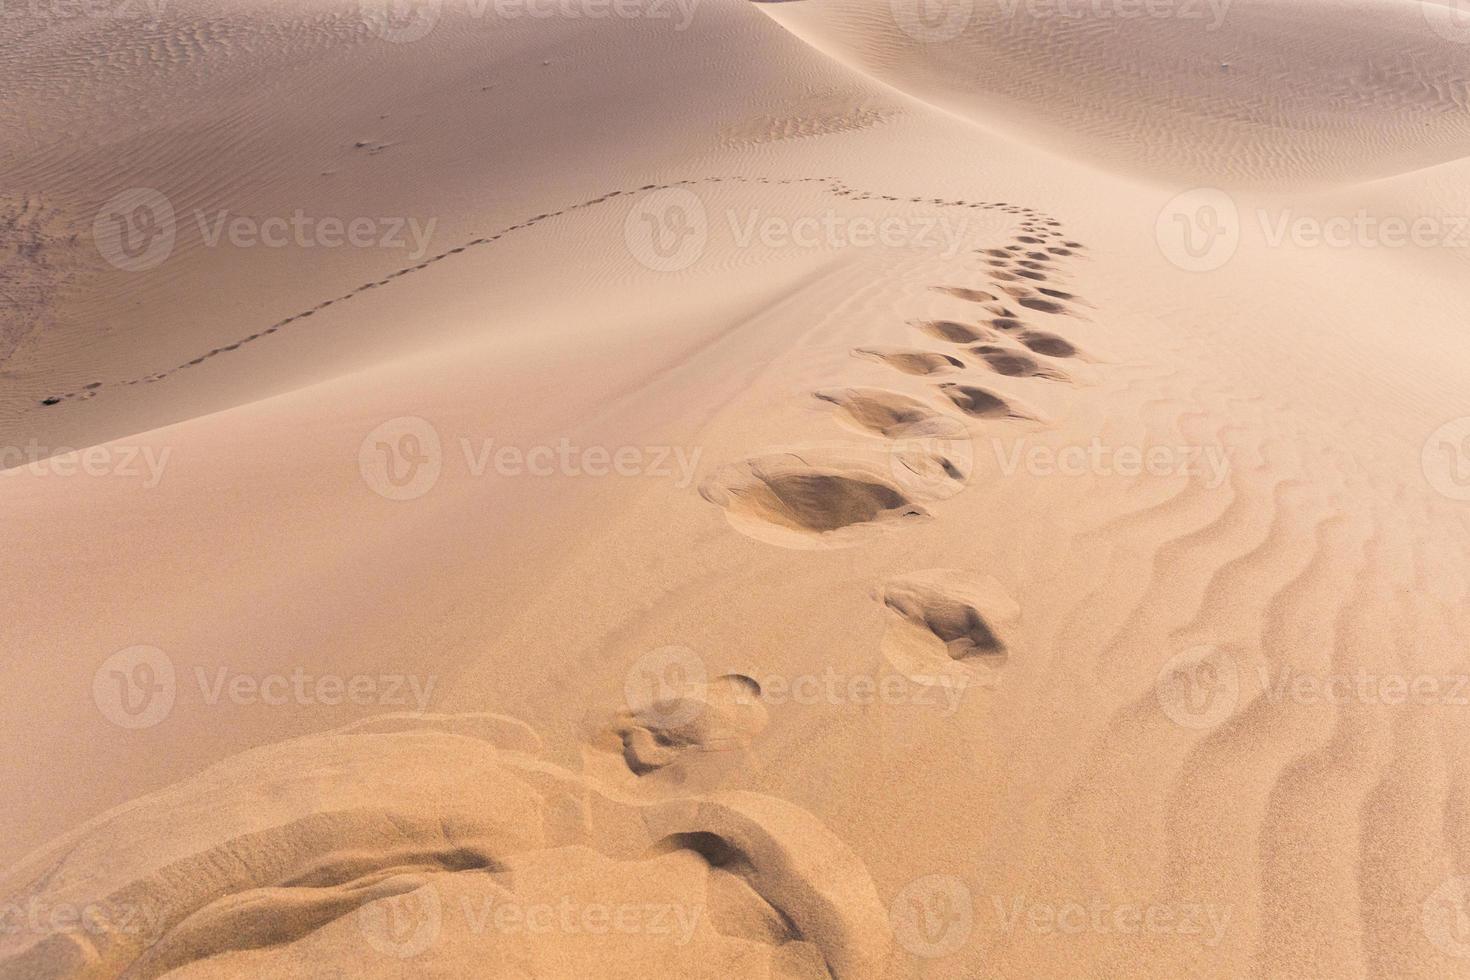 Sahara Wüste foto